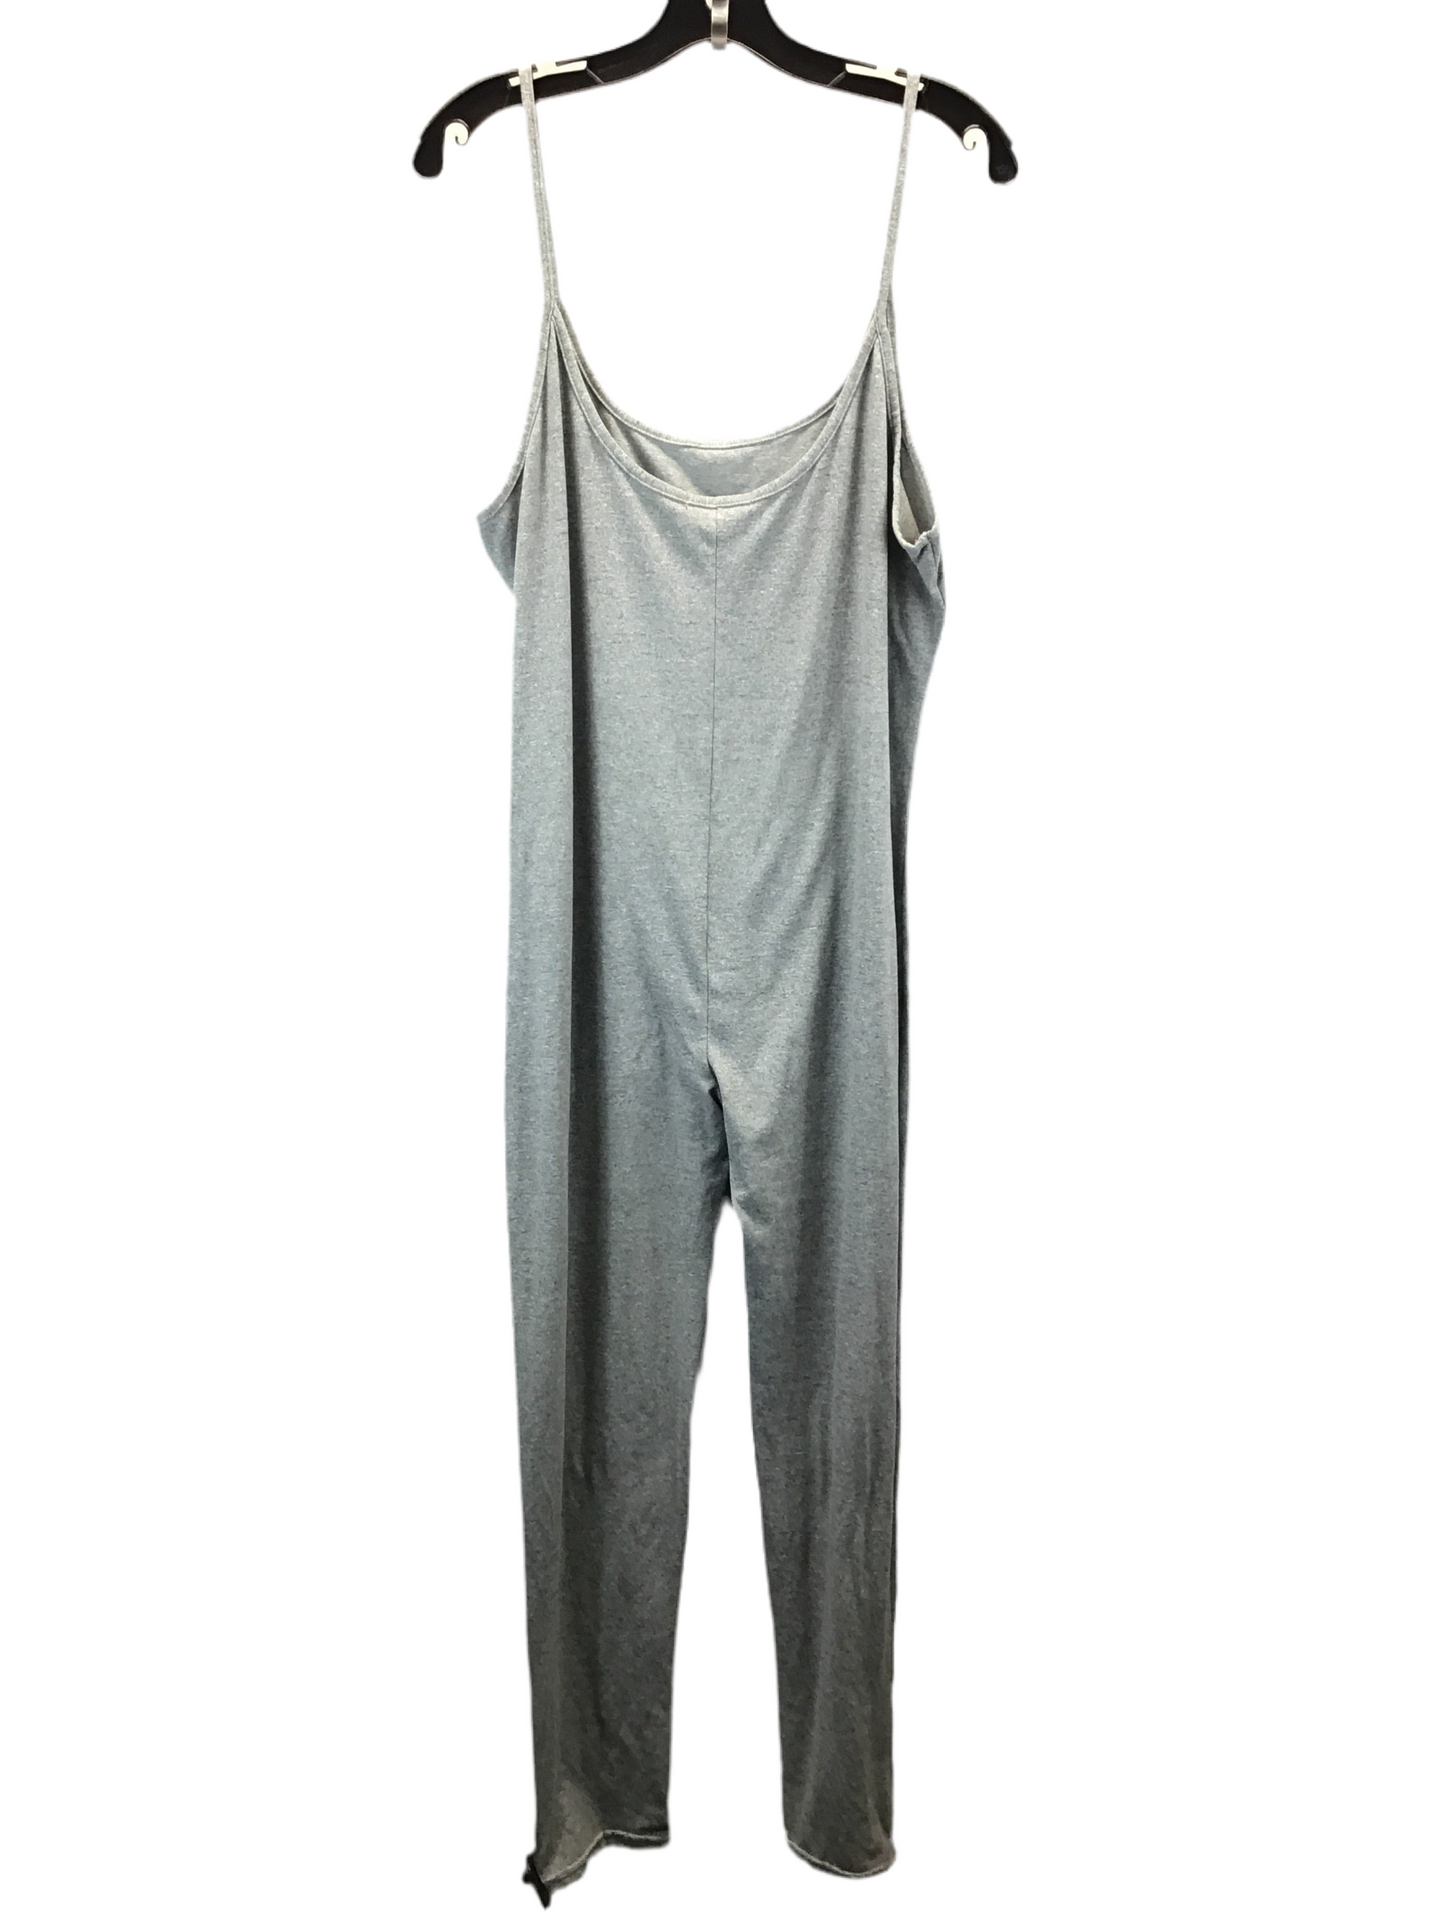 Grey Jumpsuit Clothes Mentor, Size 3x